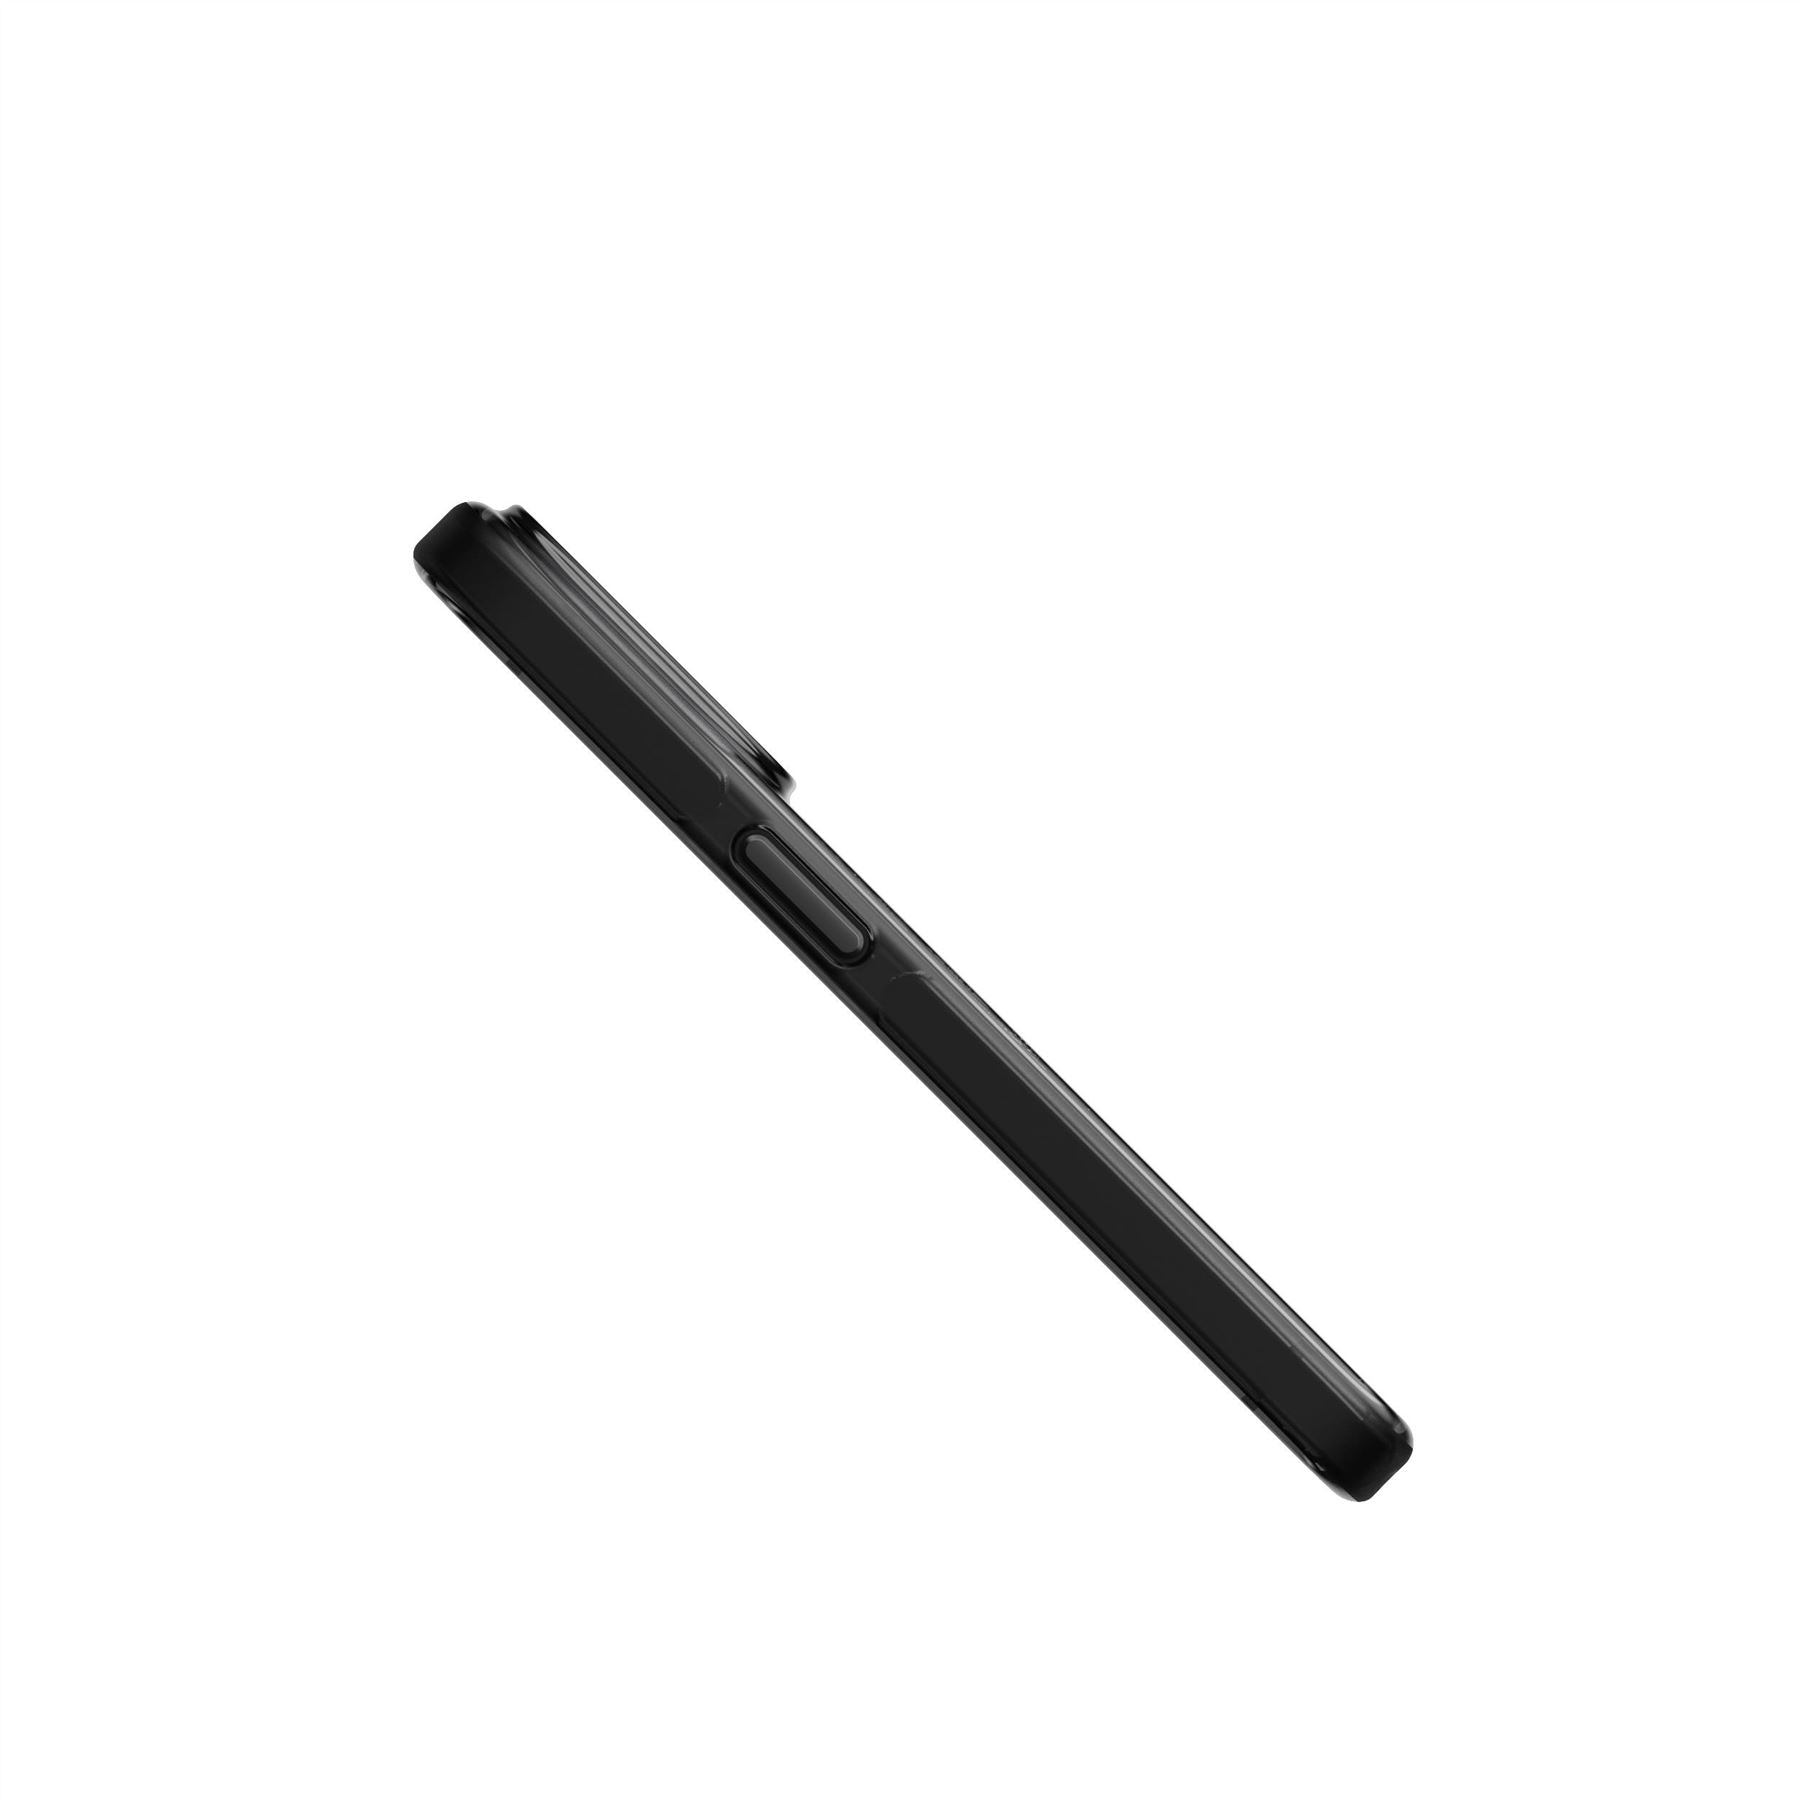 Evo Check - Apple iPhone 15 Pro Case MagSafe® Compatible - Smokey Black